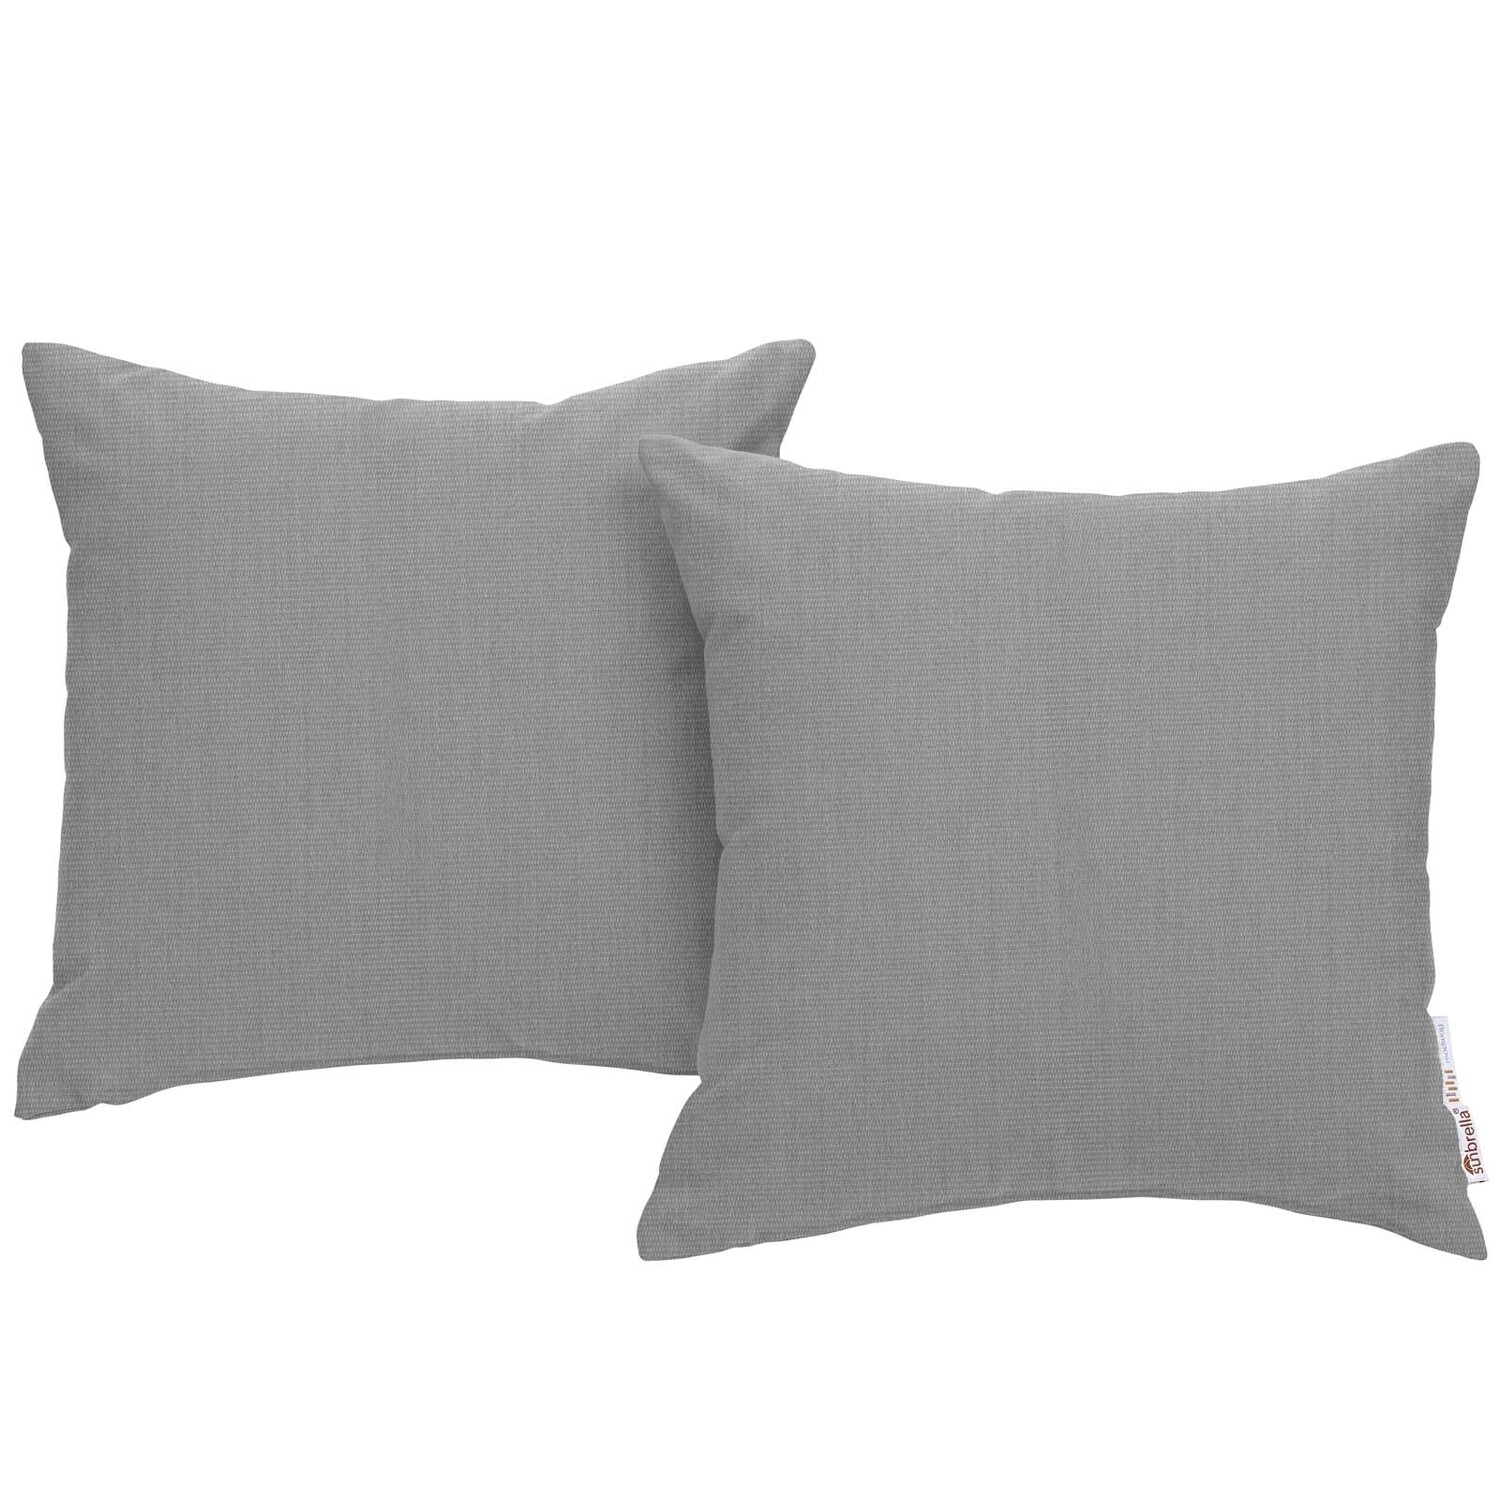 Soho Patio 2 Piece Pillow Set  17" x 17" in Gray Canvas